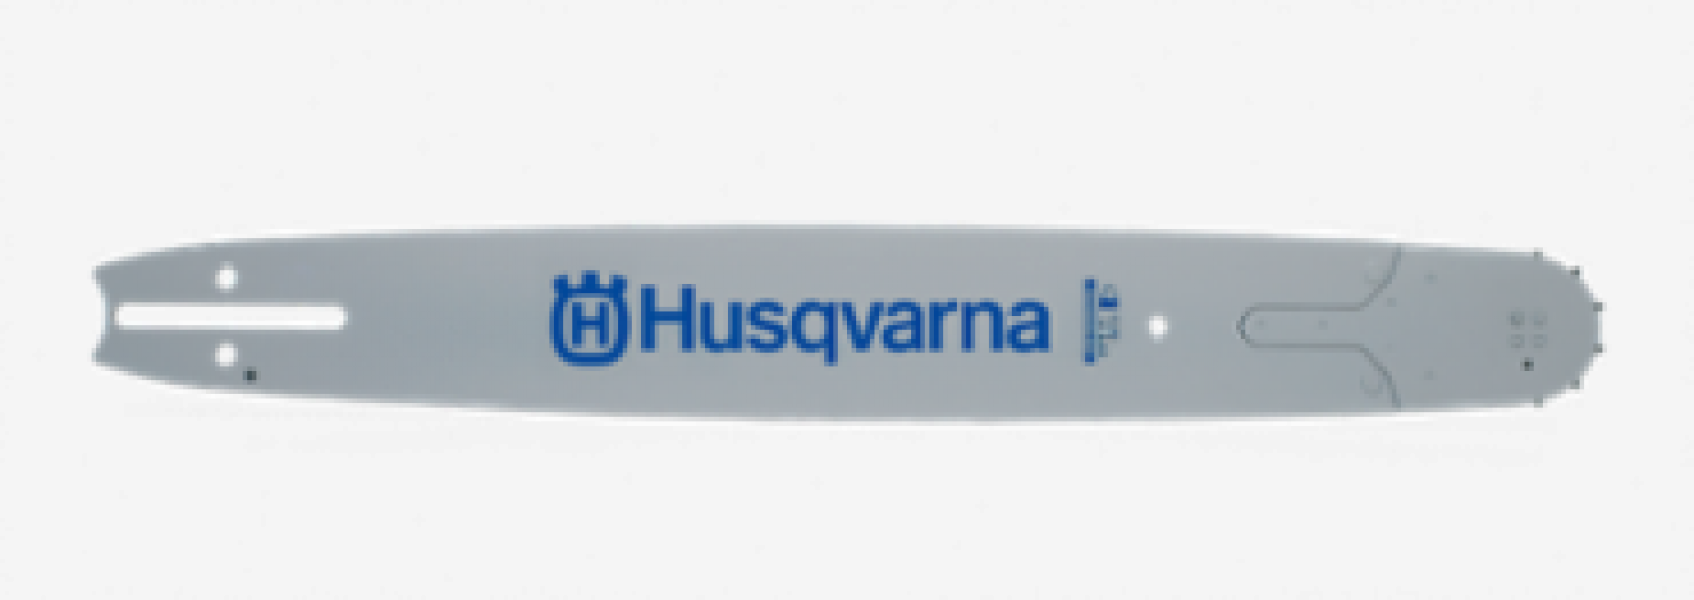 Husqvarna HL-280 16" Chainsaw Guide Bar, 3/8" mini pitch, .050 gauge, small